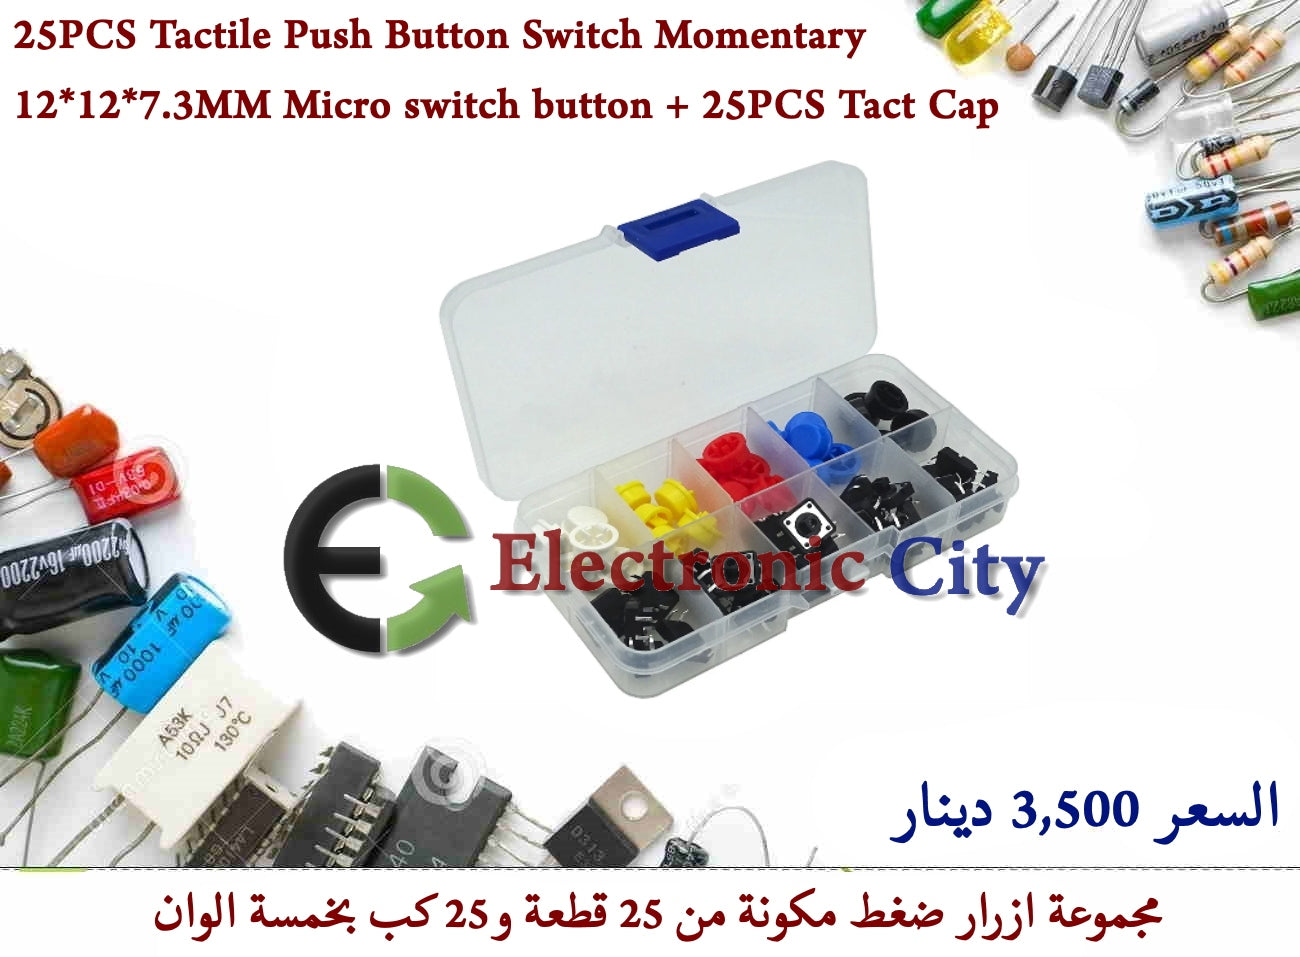 25PCS Tactile Push Button Switch Momentary 12X12X7.3MM Micro switch button & 25PCS Tact Cap